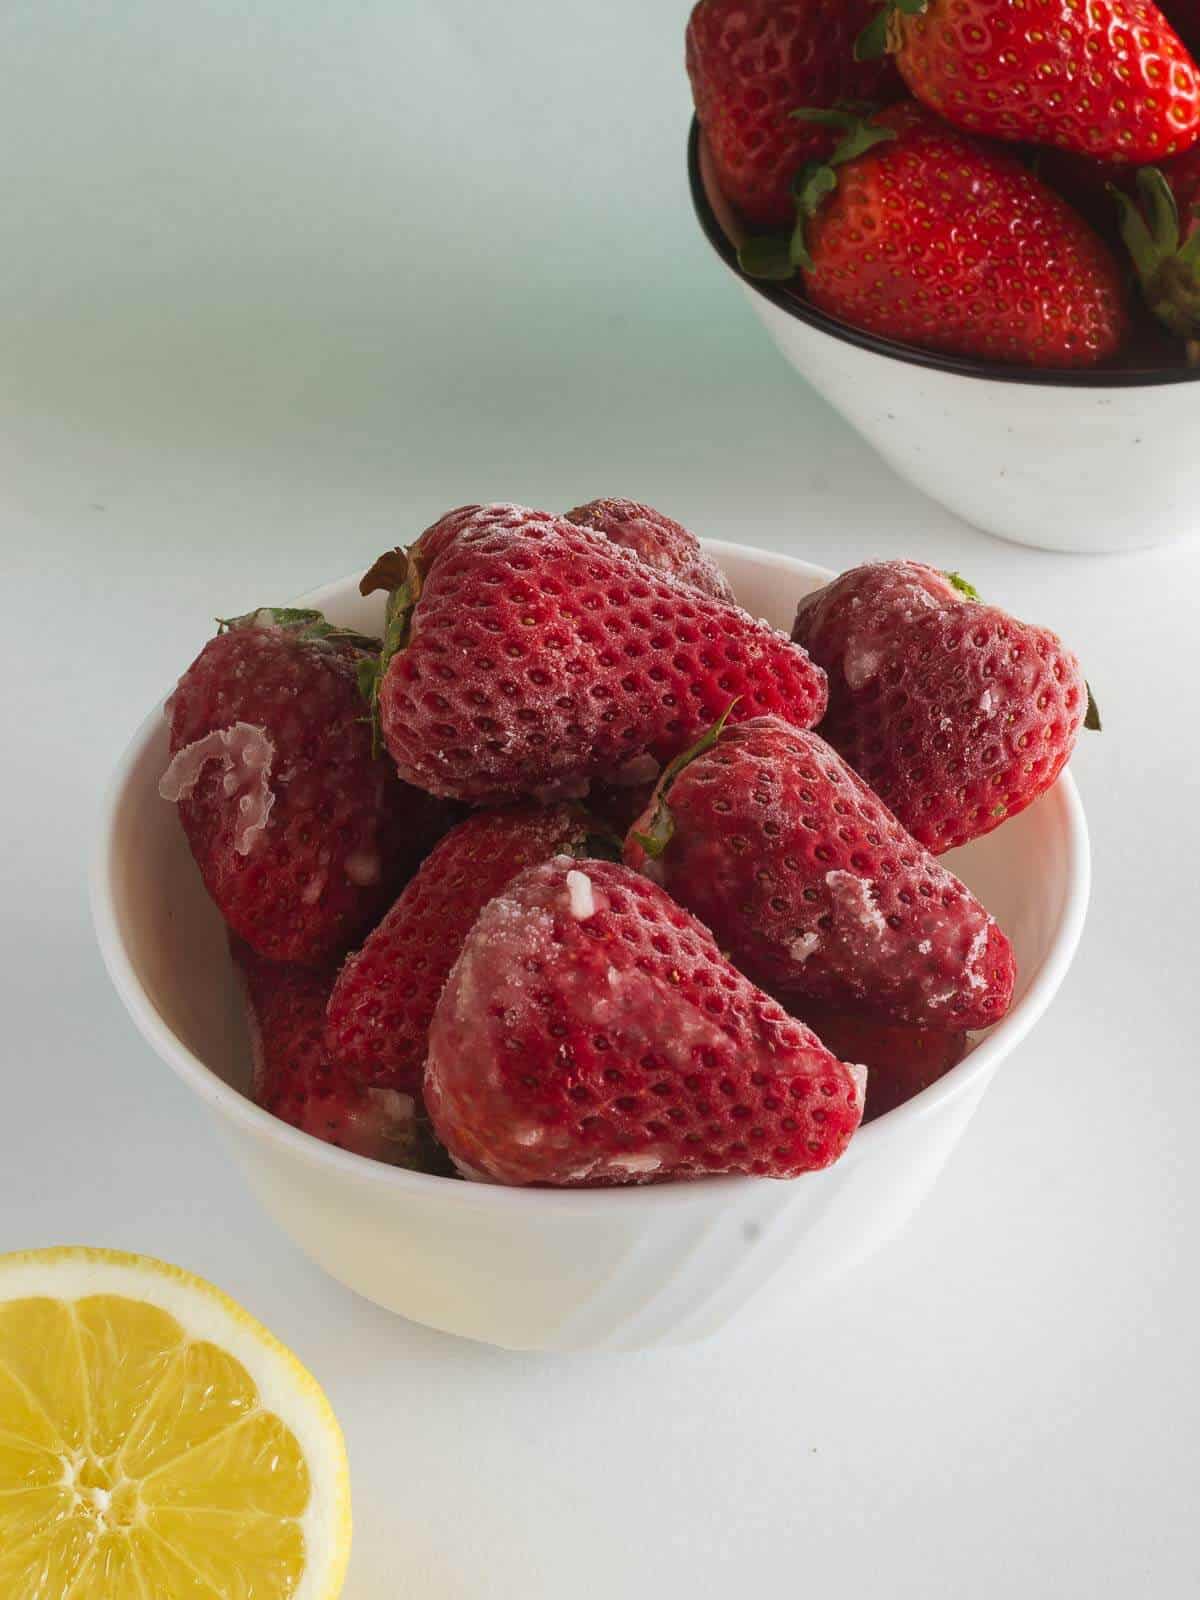 un bowl con fresas congeladas junto a otro con fresas frescas y medio limón.